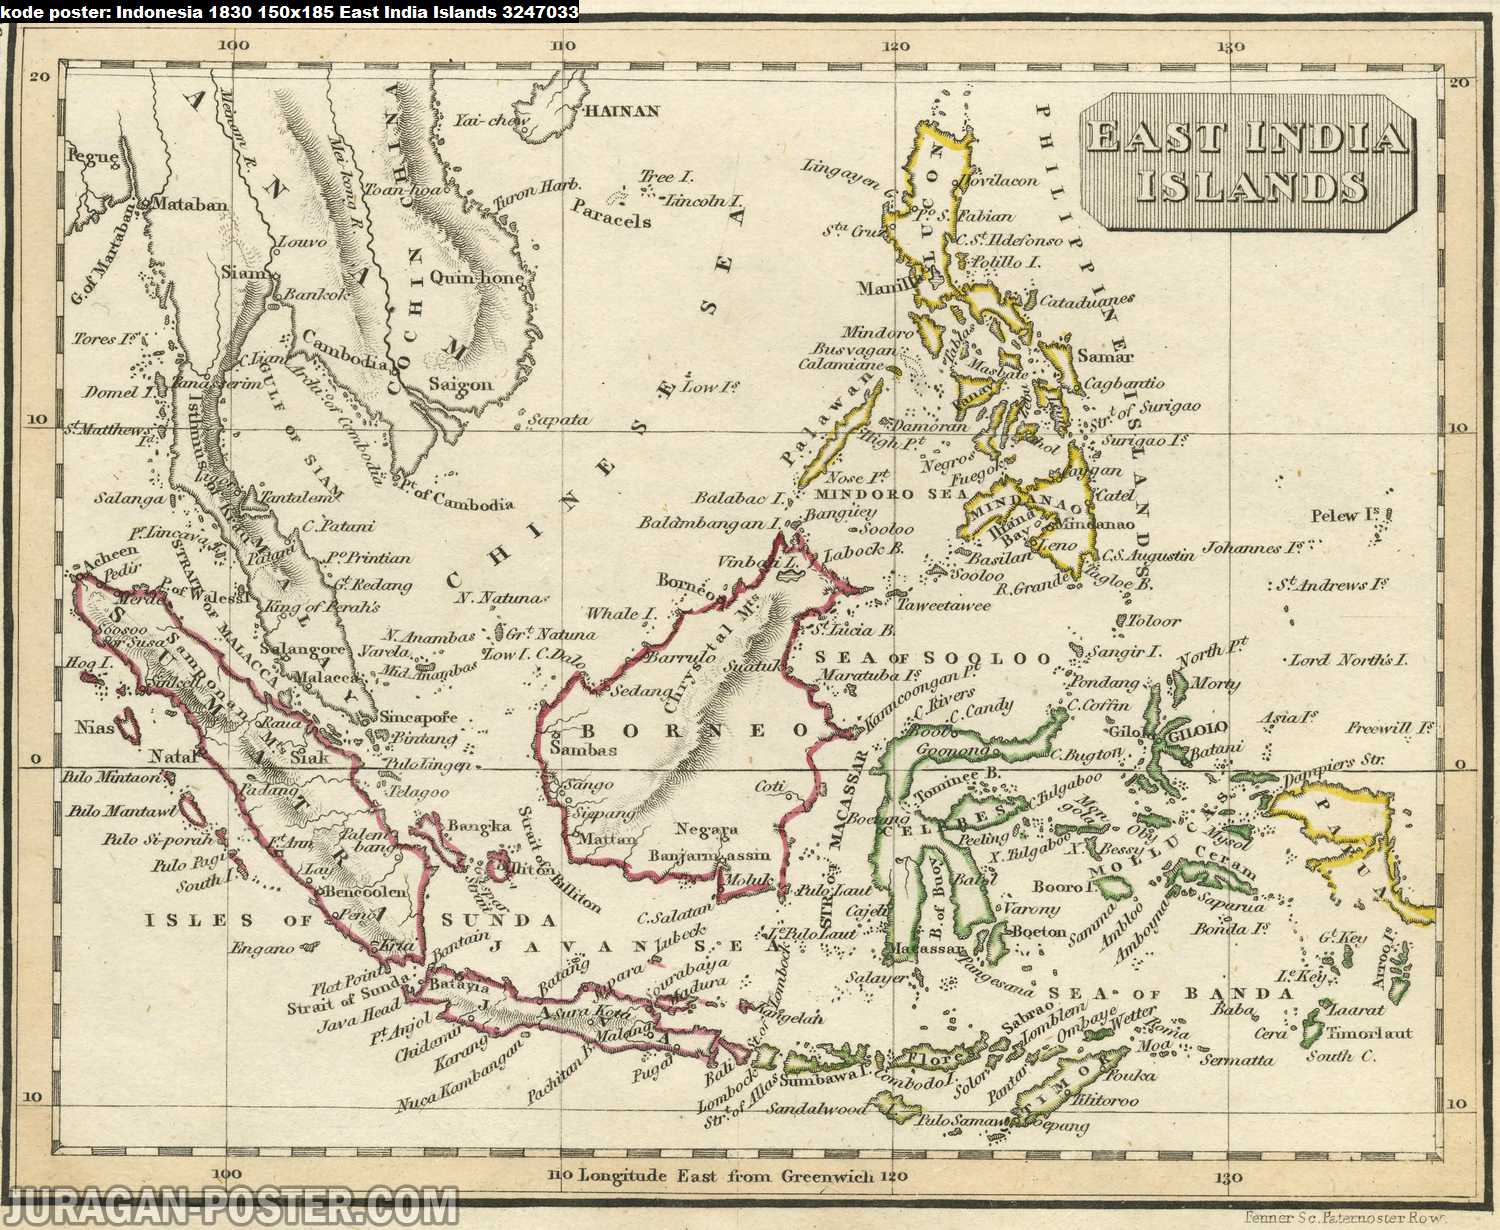 peta indonesia kuno tahun 1830